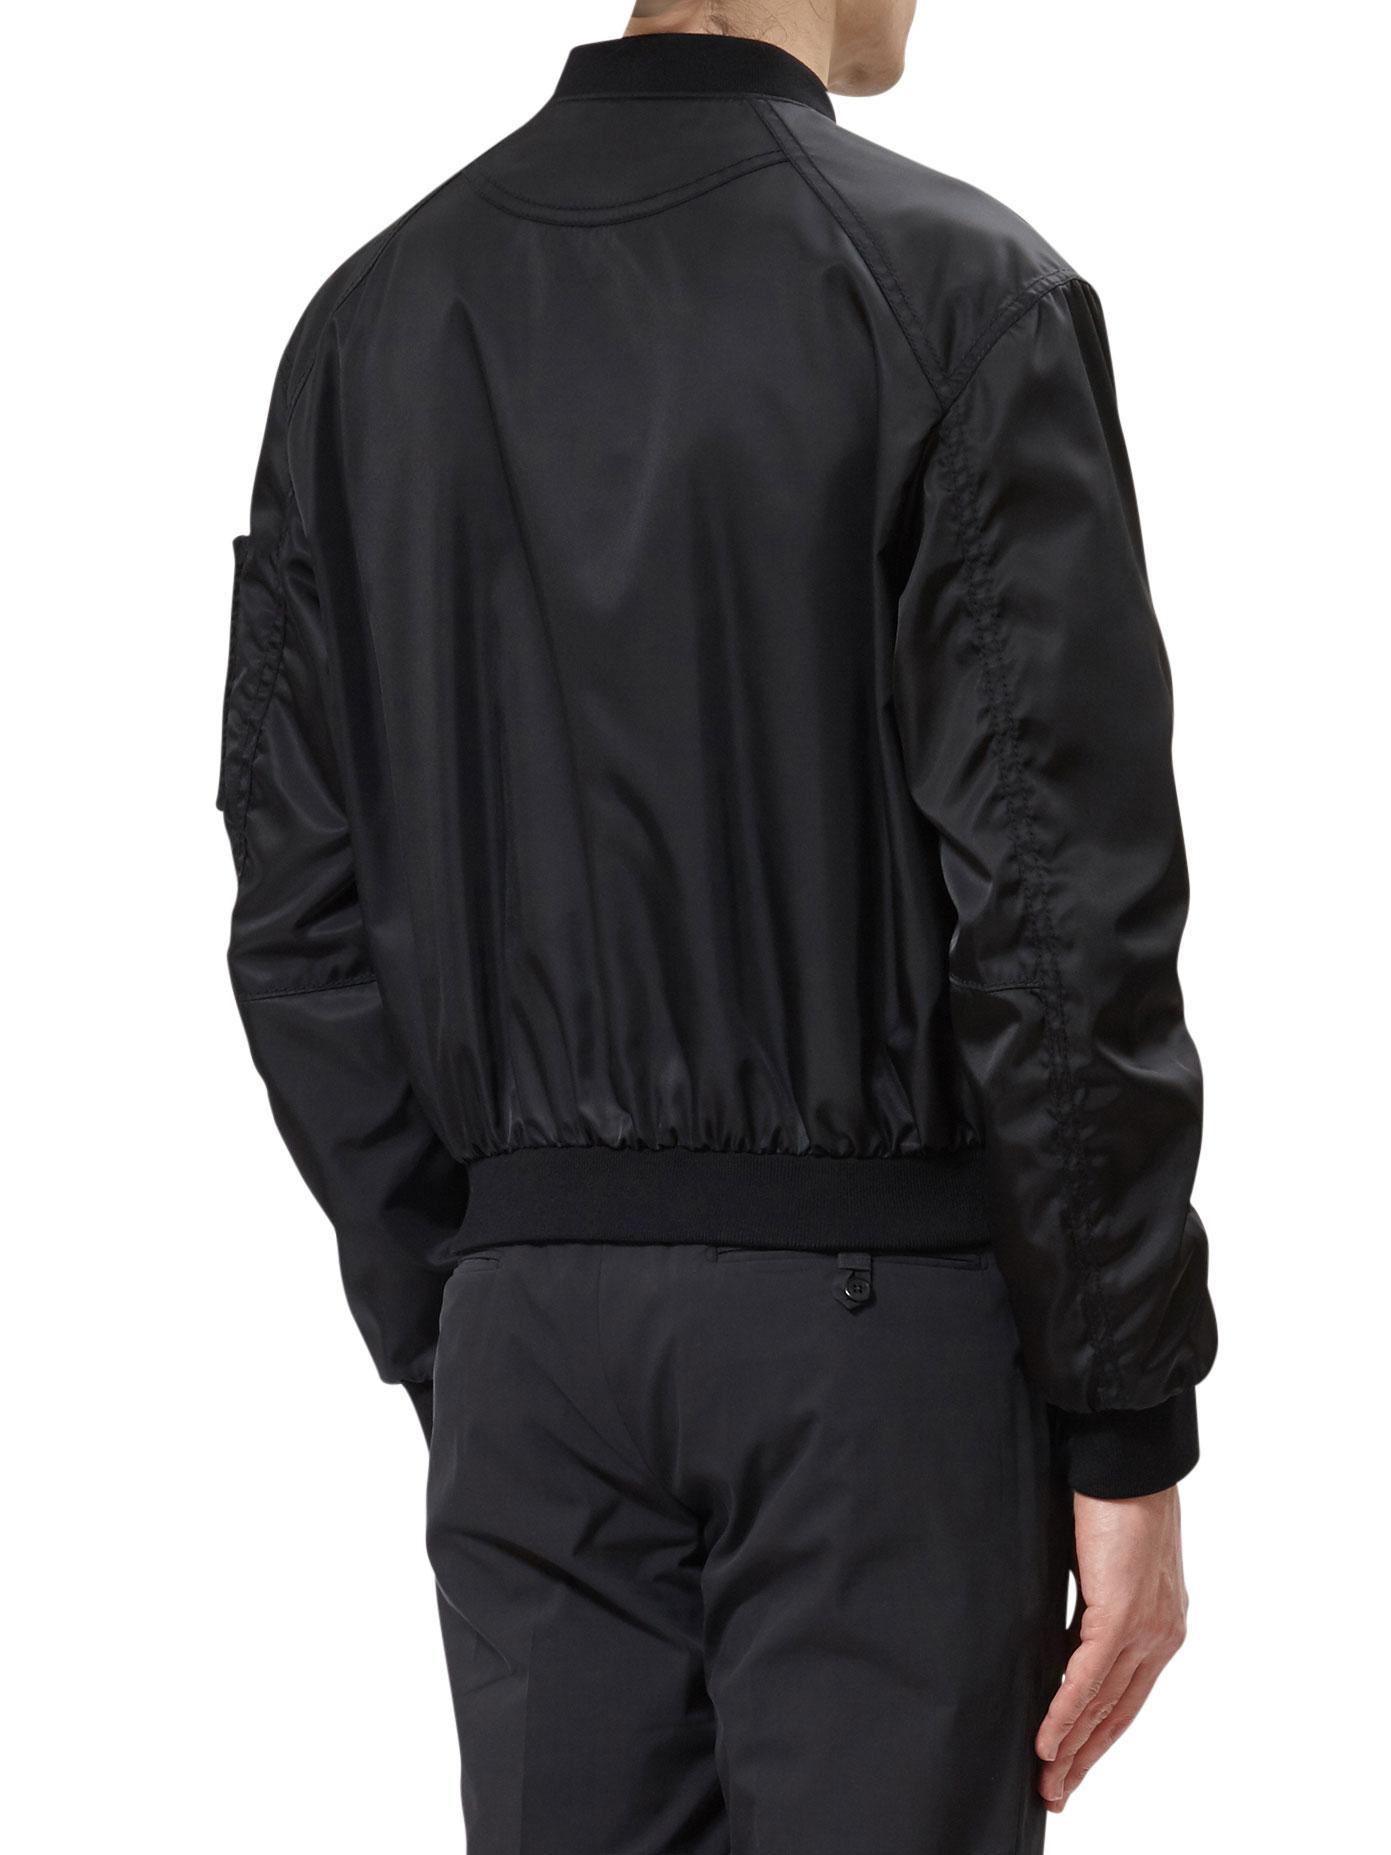 Prada Synthetic Nylon Bomber Jacket in Black for Men - Lyst